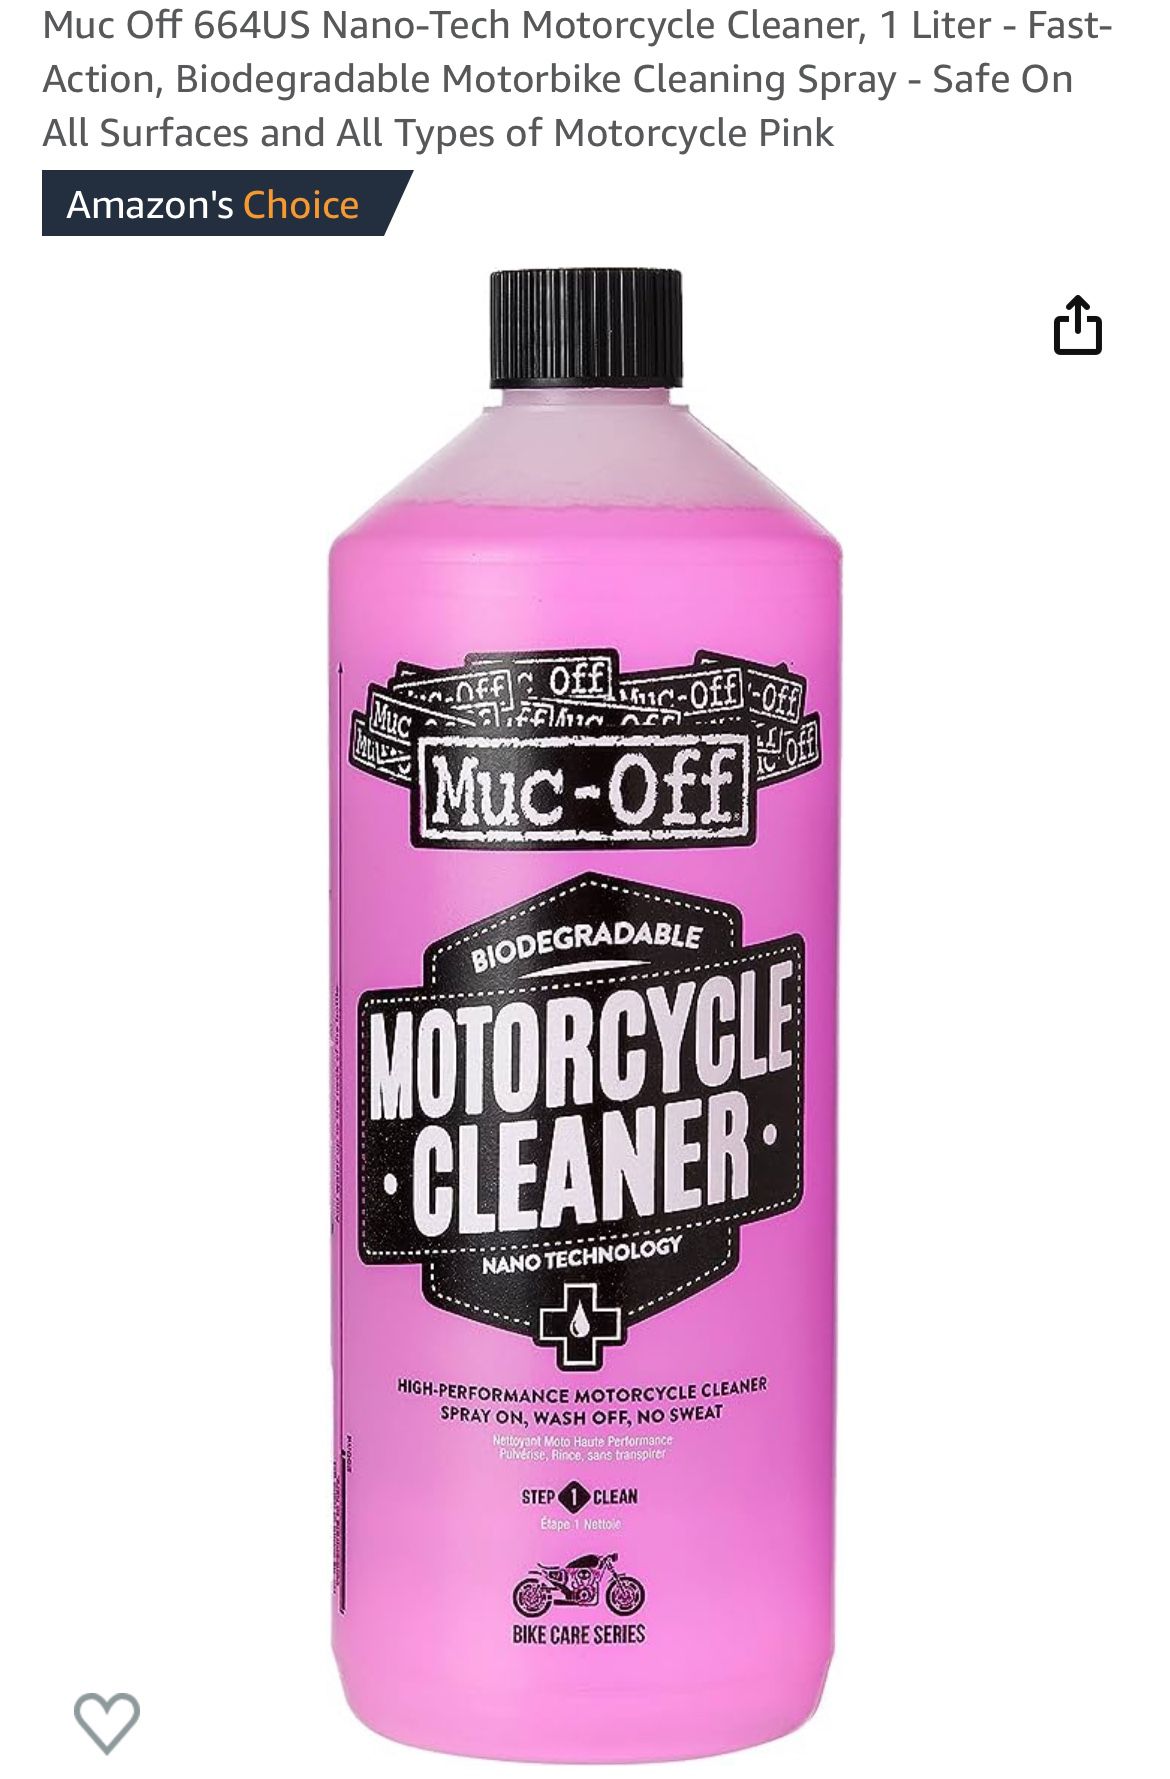 Motorcycle Cleaner, 1 Liter